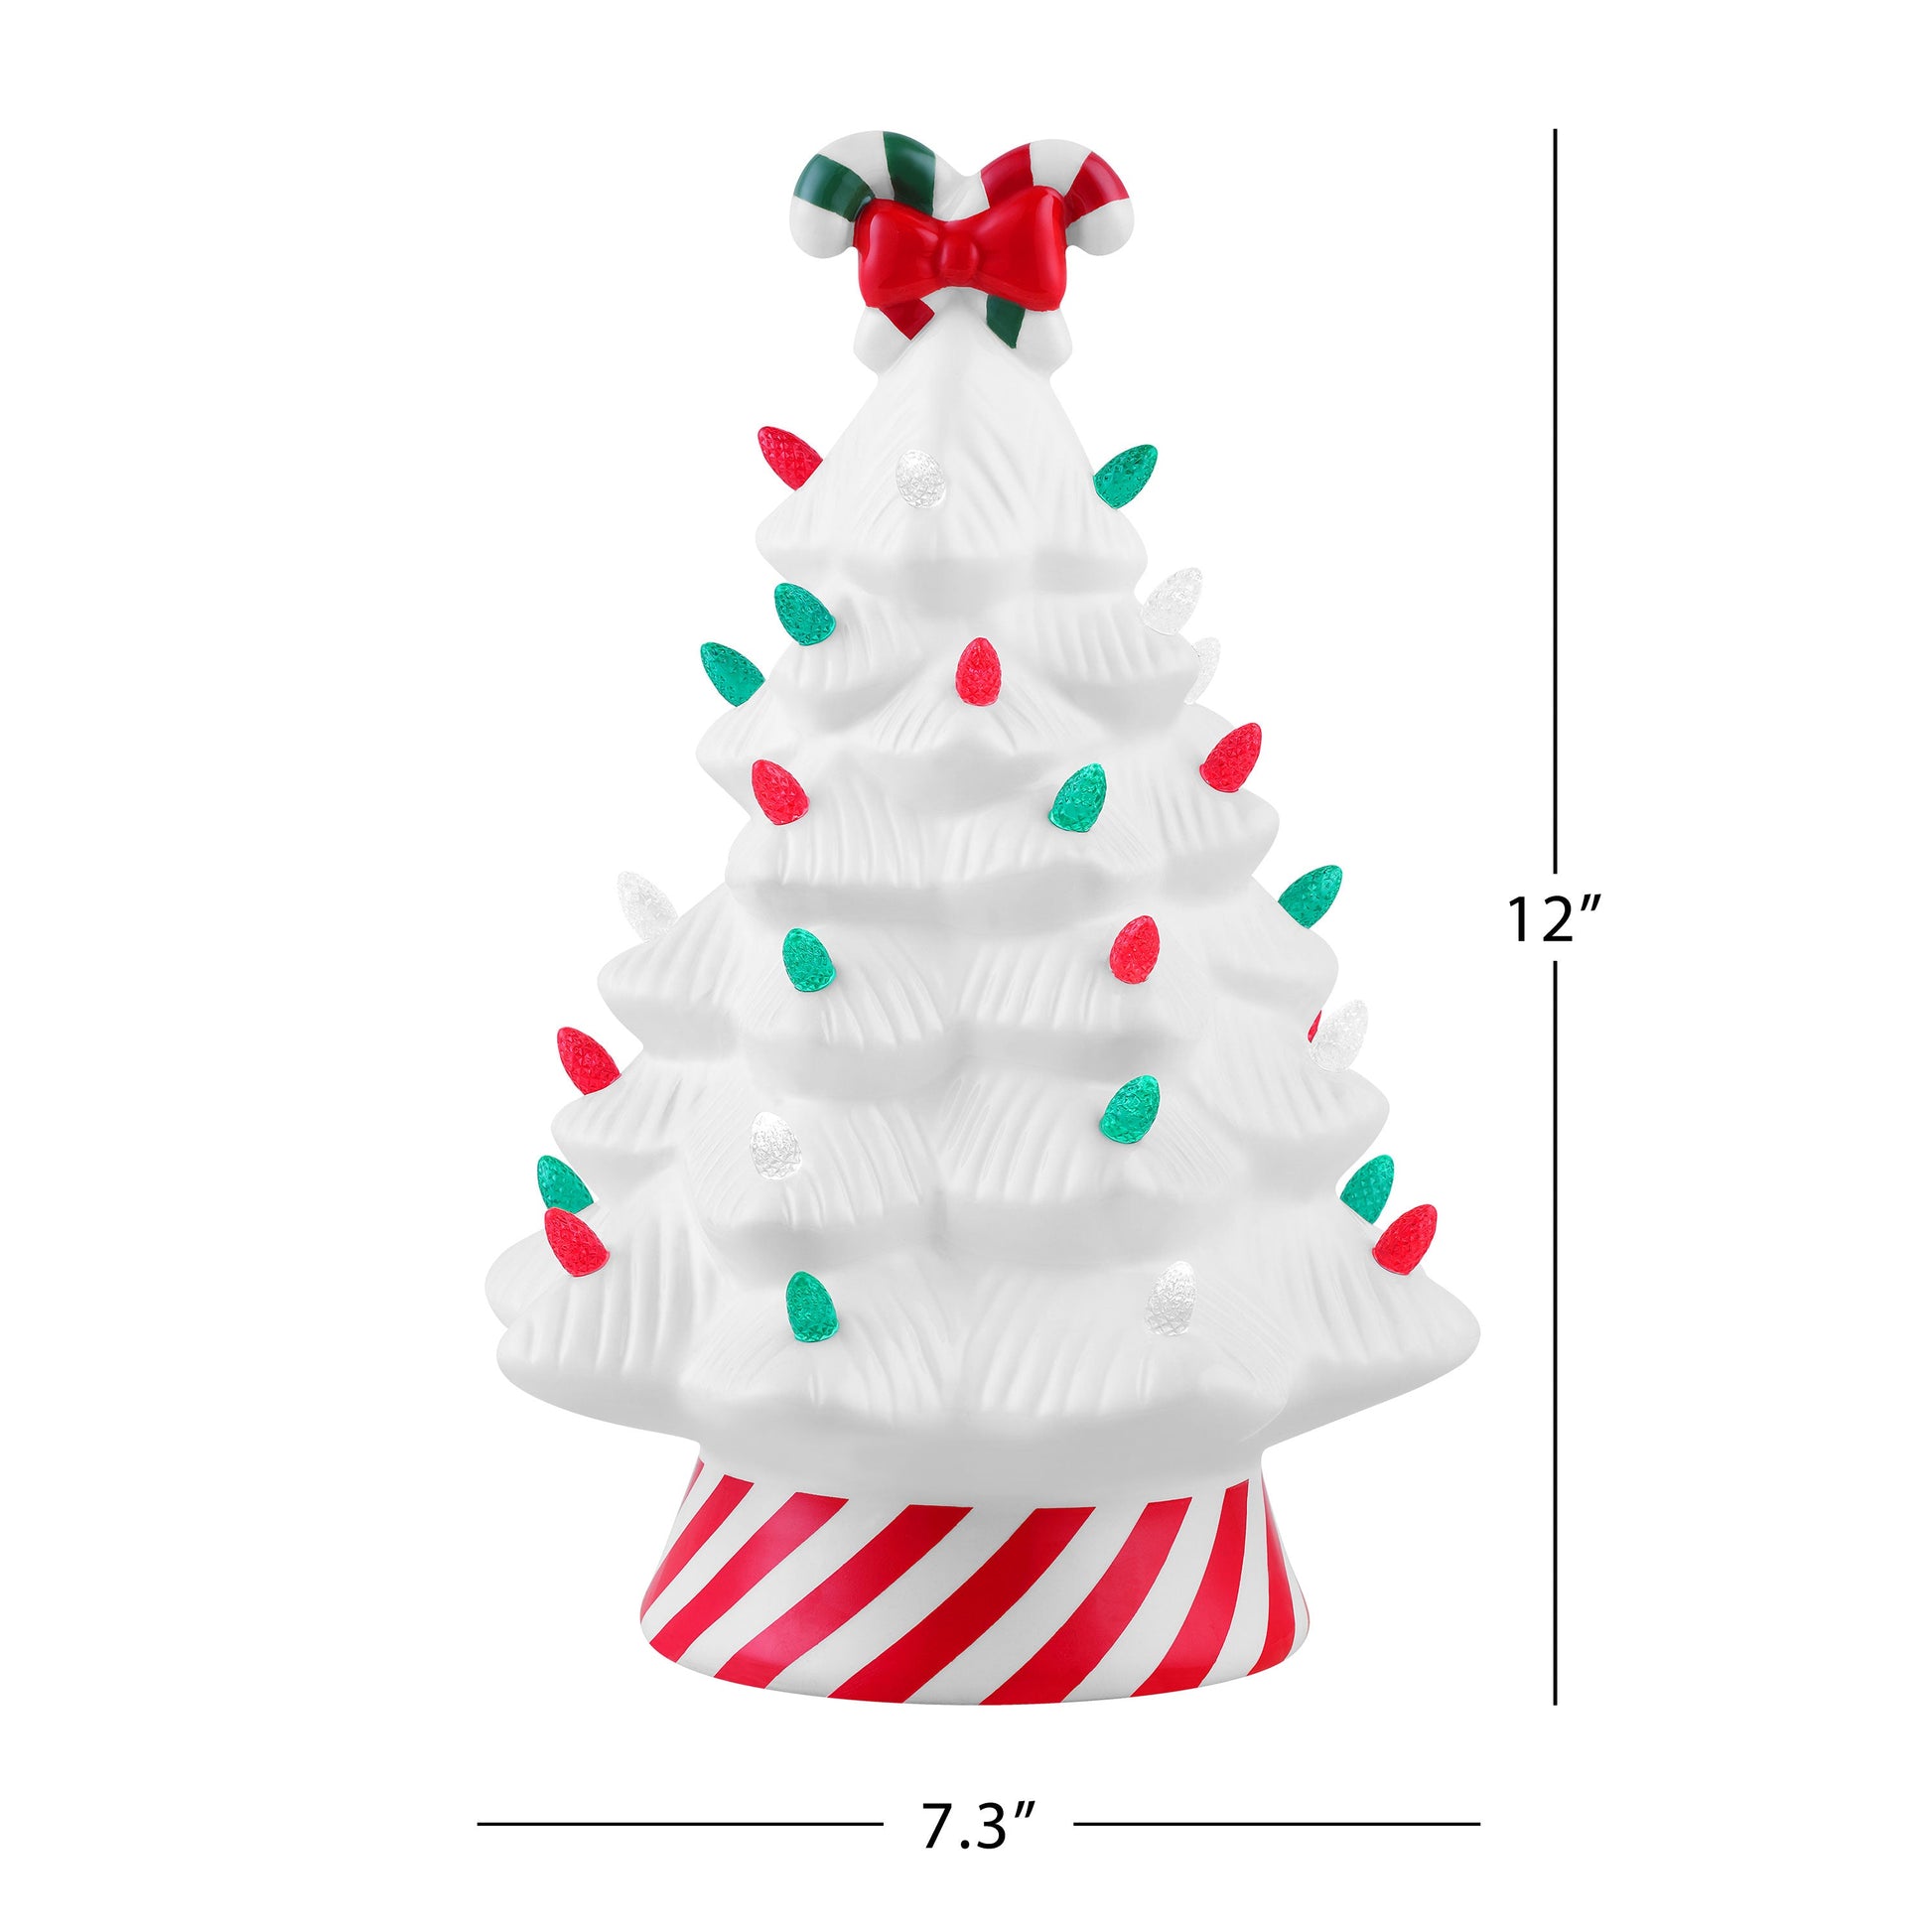 12" Nostalgic Ceramic Lit Candy Cane Tree - Red - Mr. Christmas